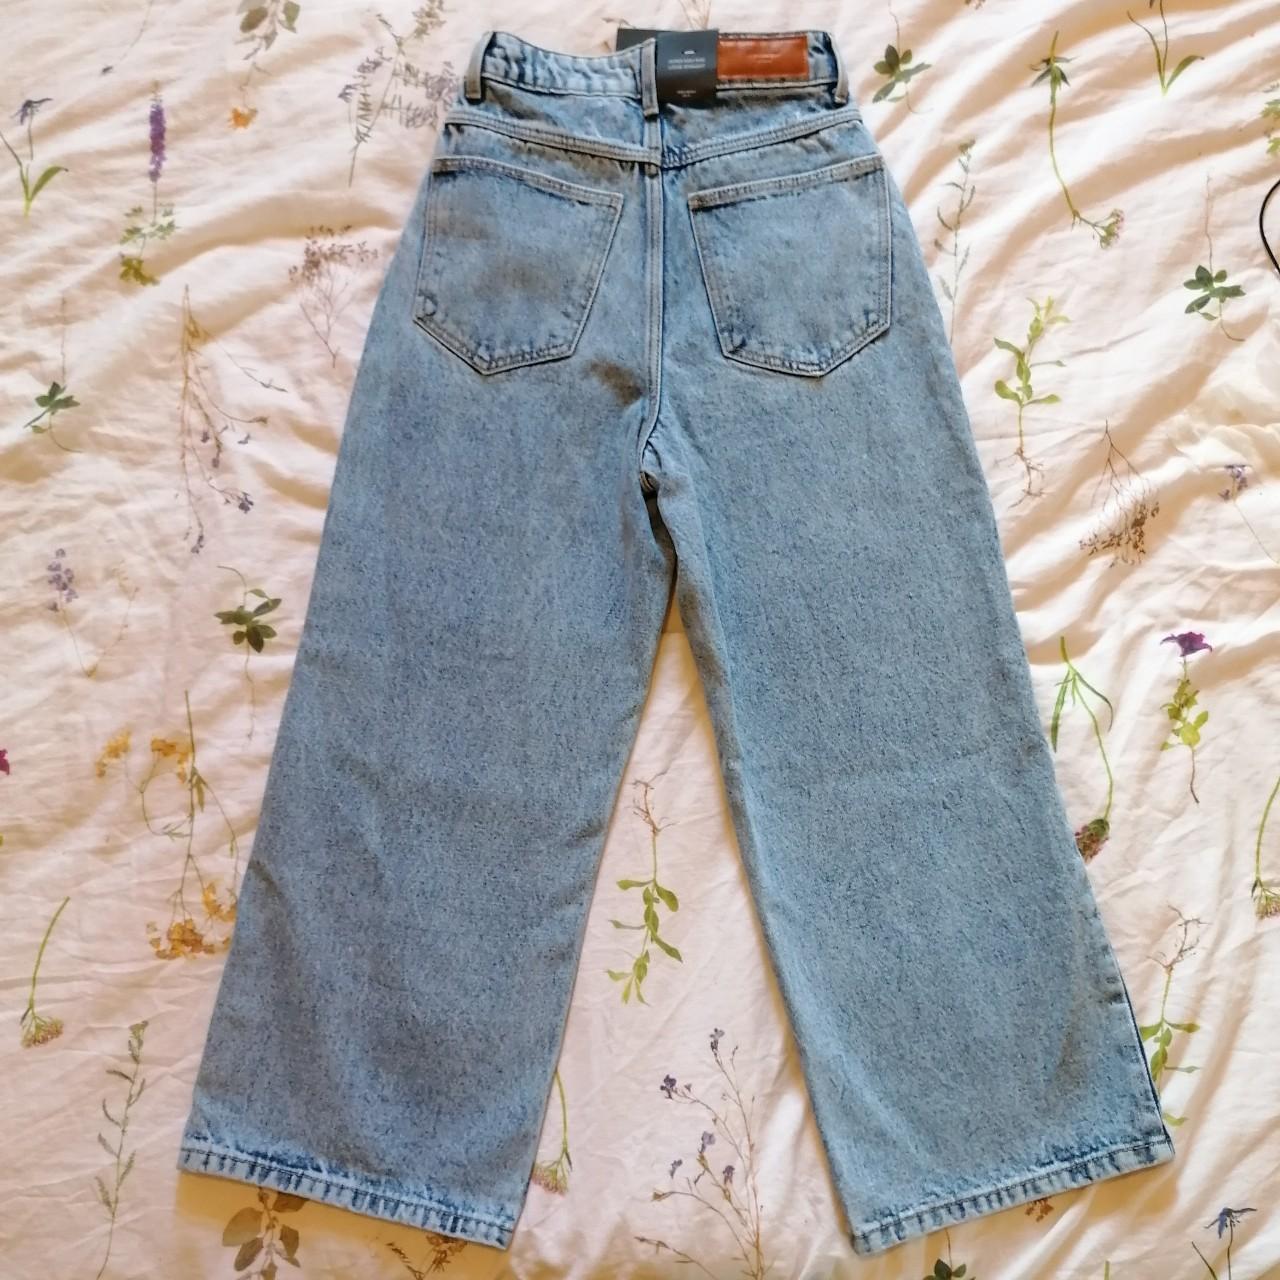 Vera Moda petite wide leg jeans, size 24